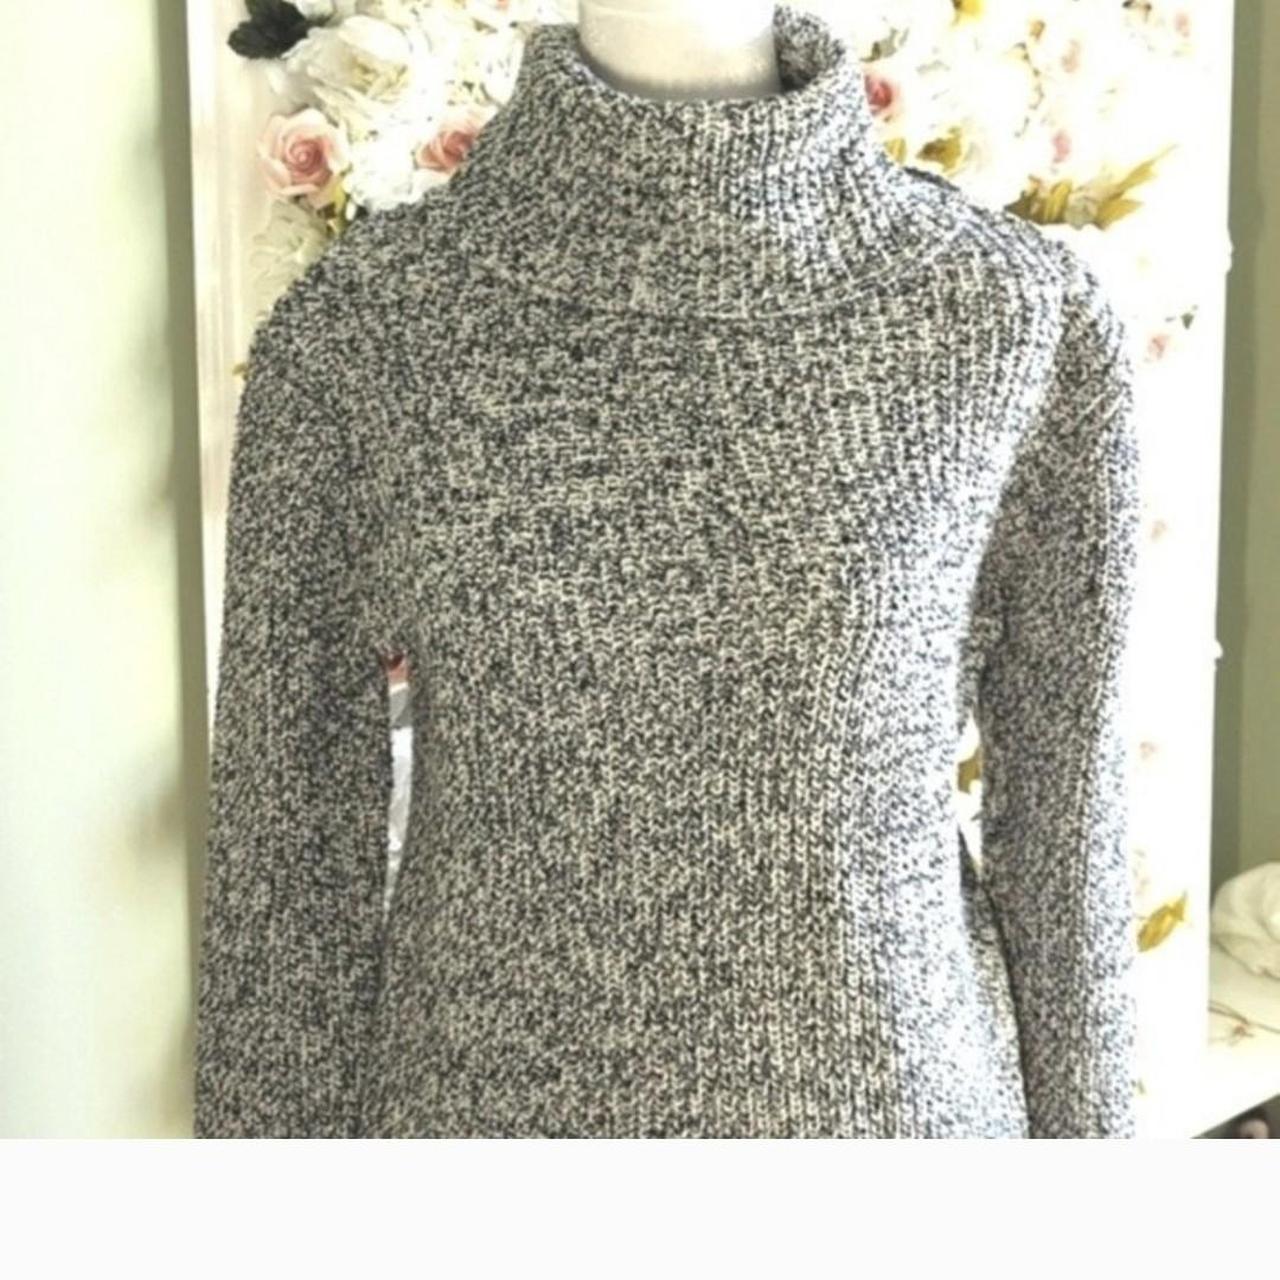 Abercrombie turtleneck sweater - Depop